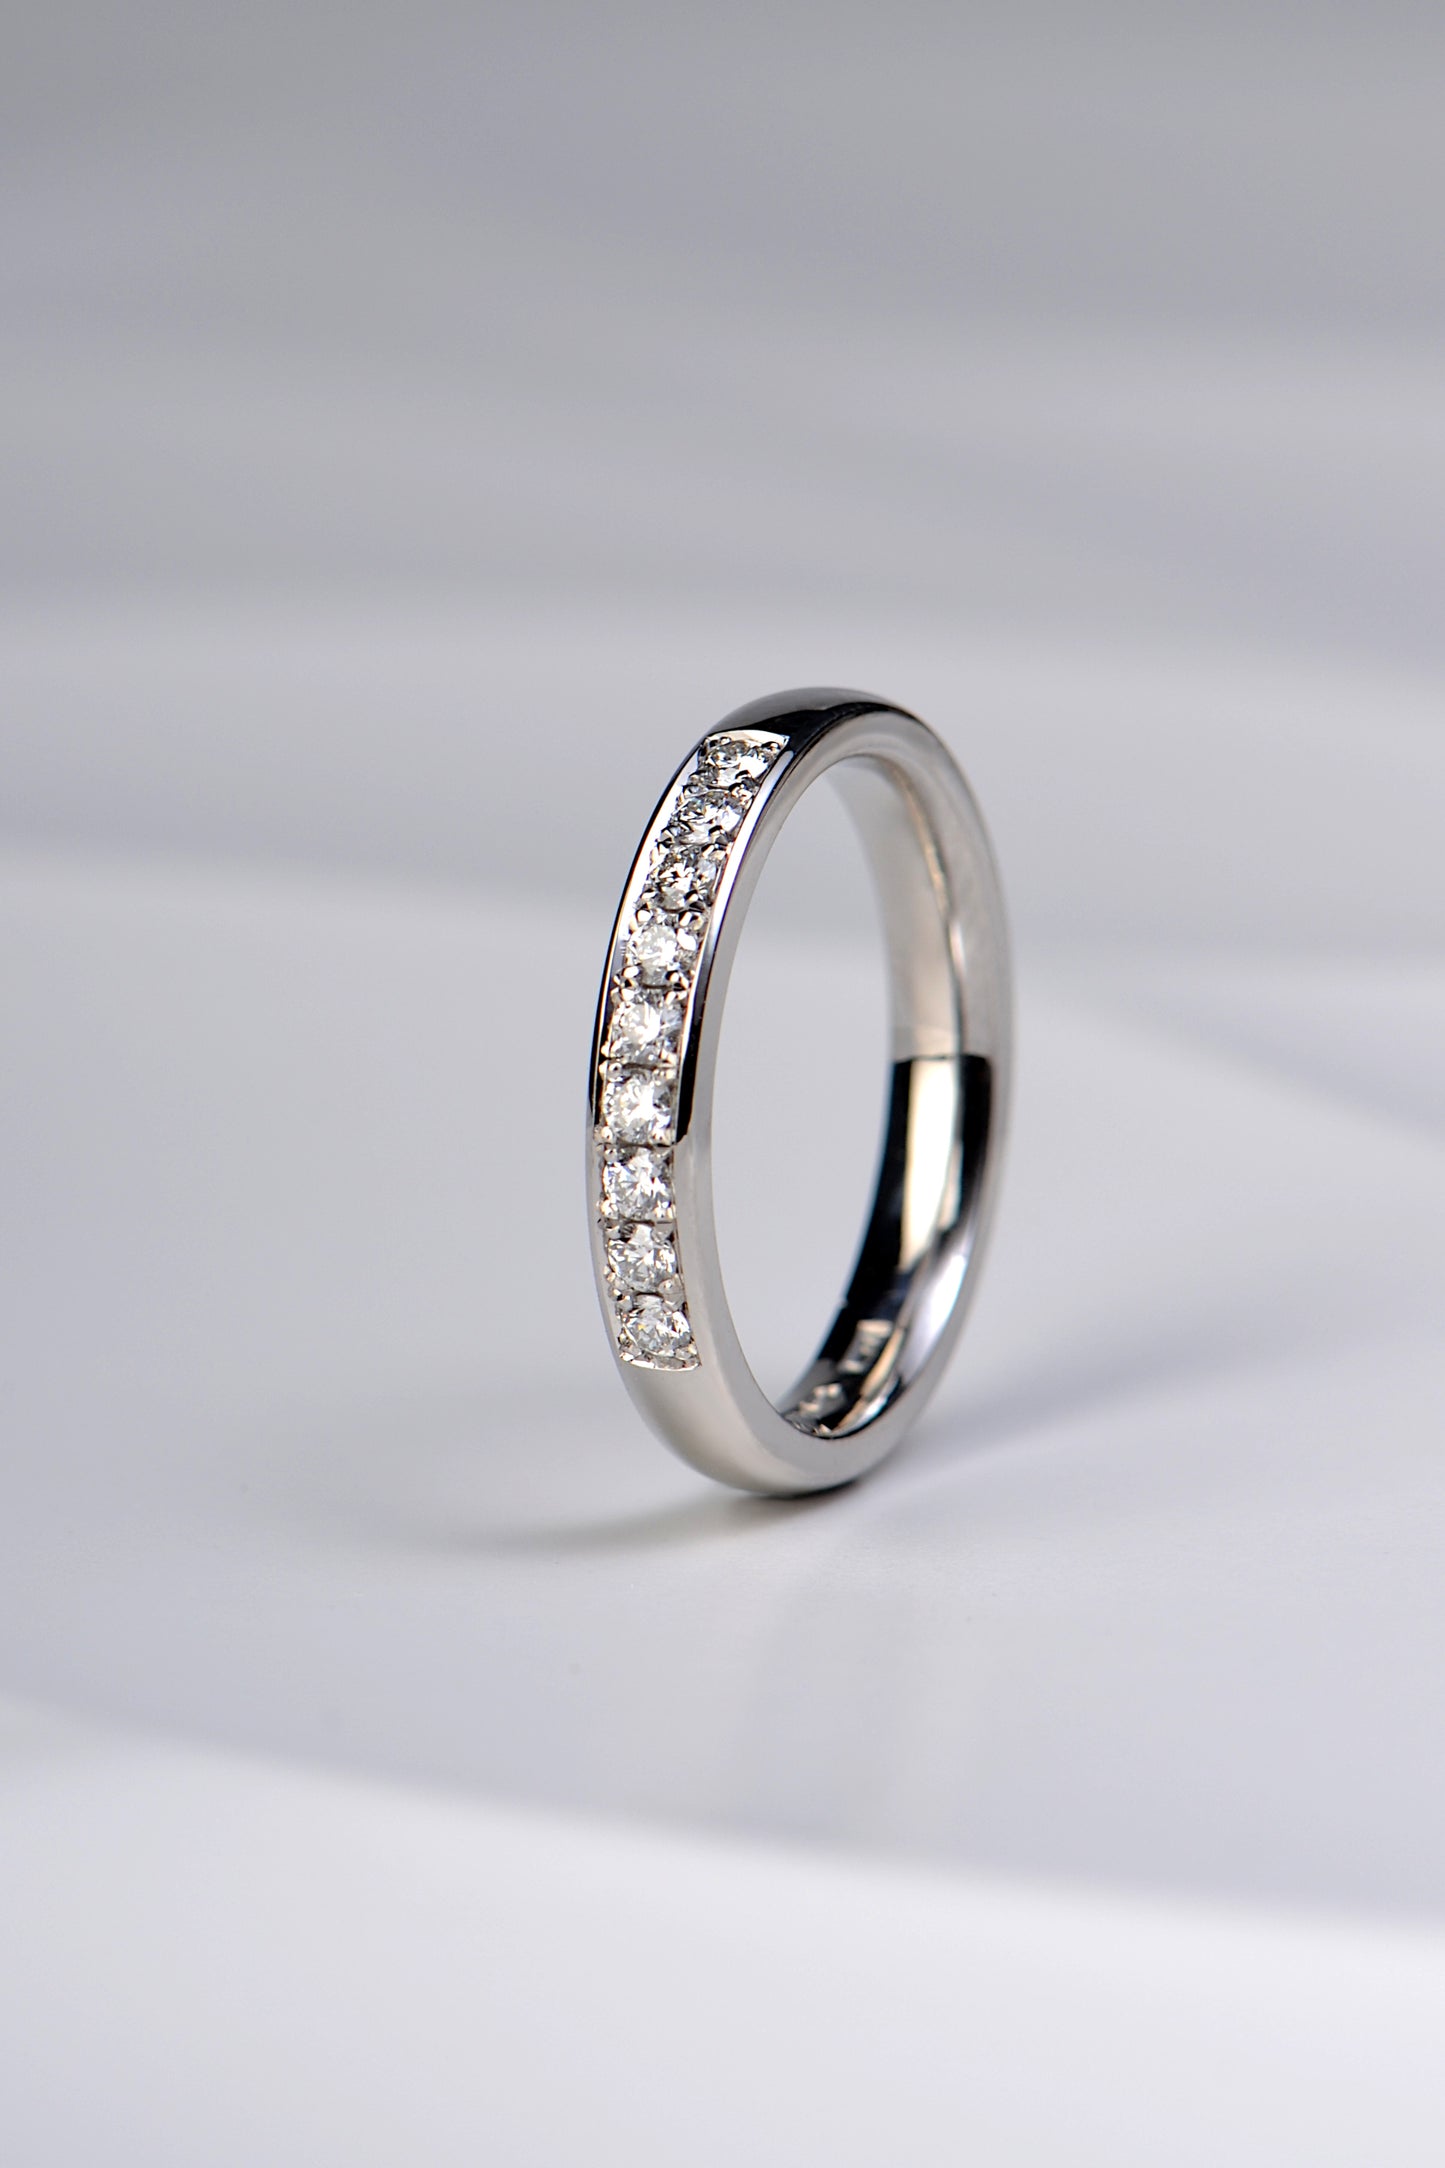 Handmade diamond wedding ring